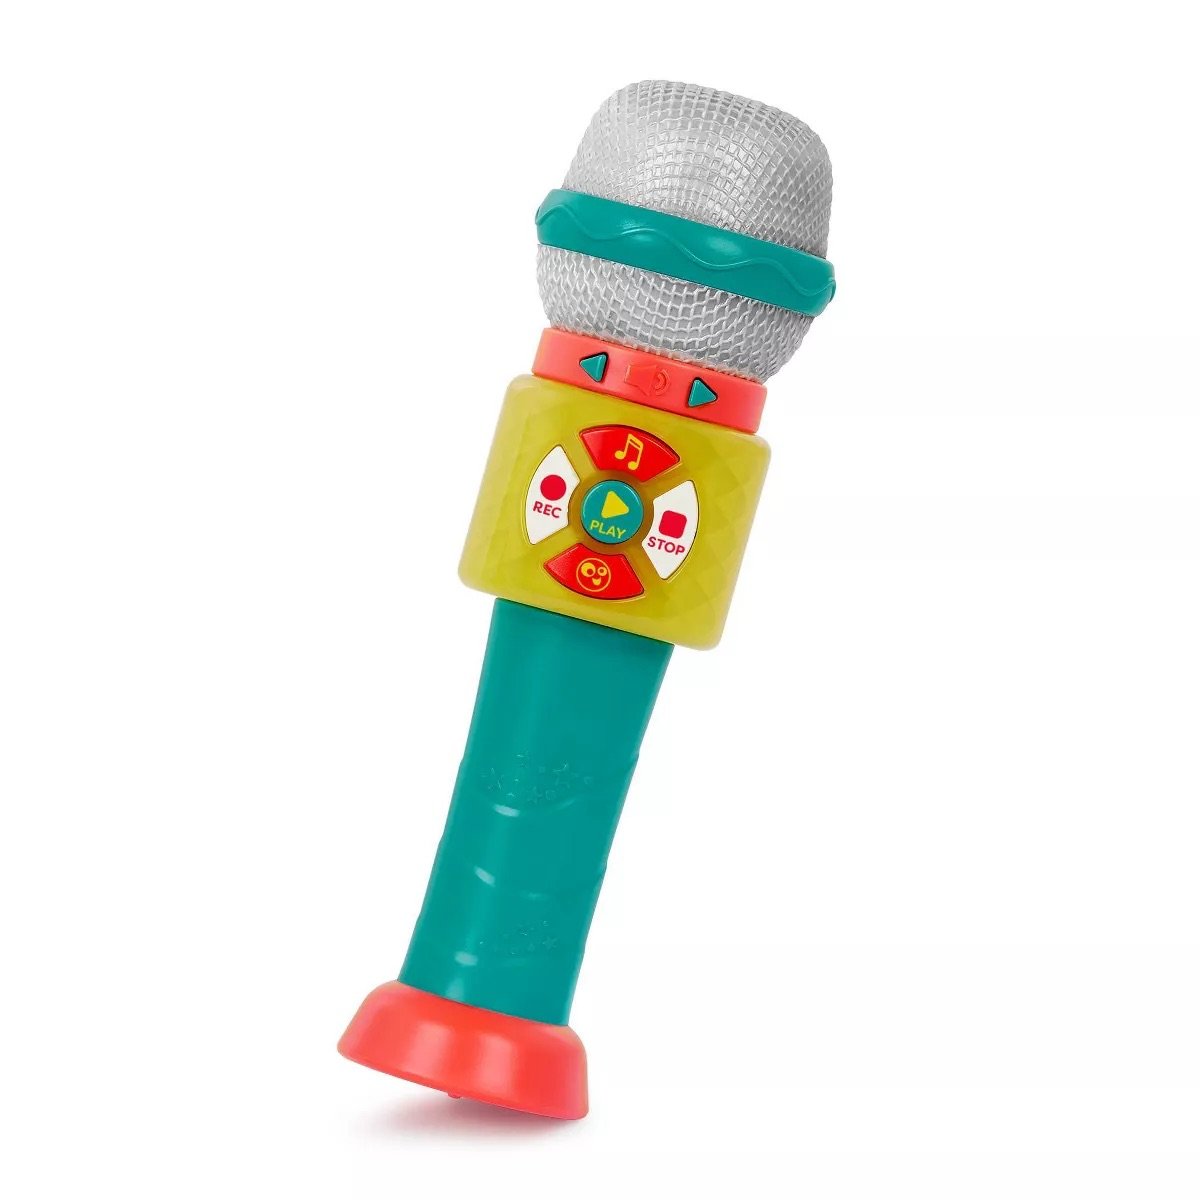 B. toys Toy Bluetooth Karaoke Microphone Shinin' Musical Mic.jpeg